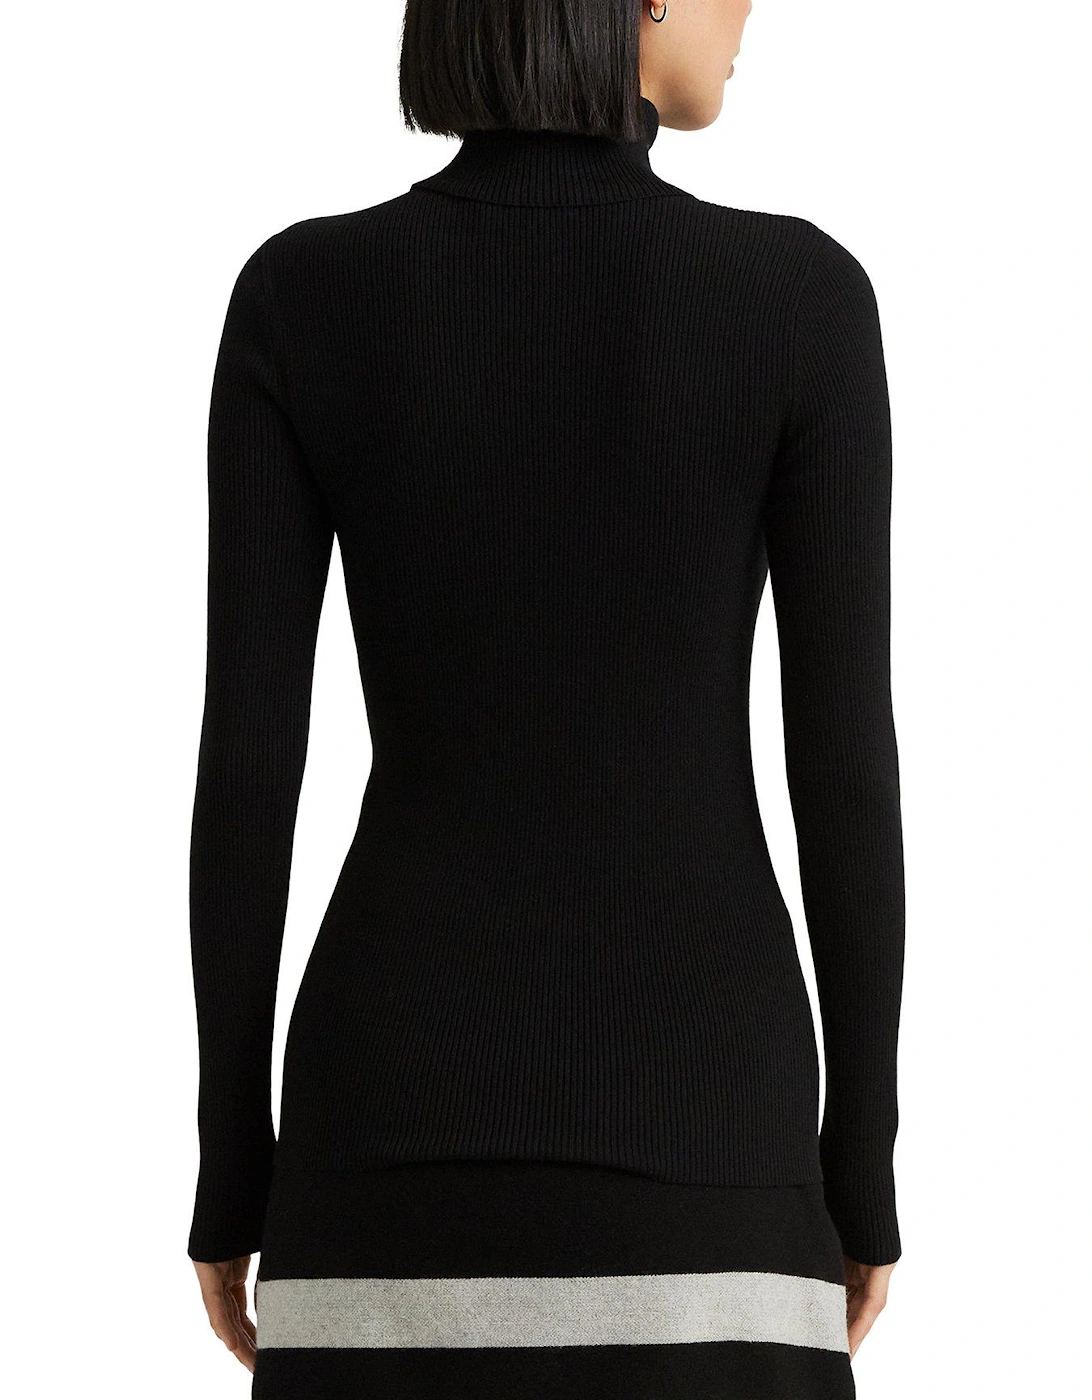 Amanda-long Sleeve-sweater - Polo Black